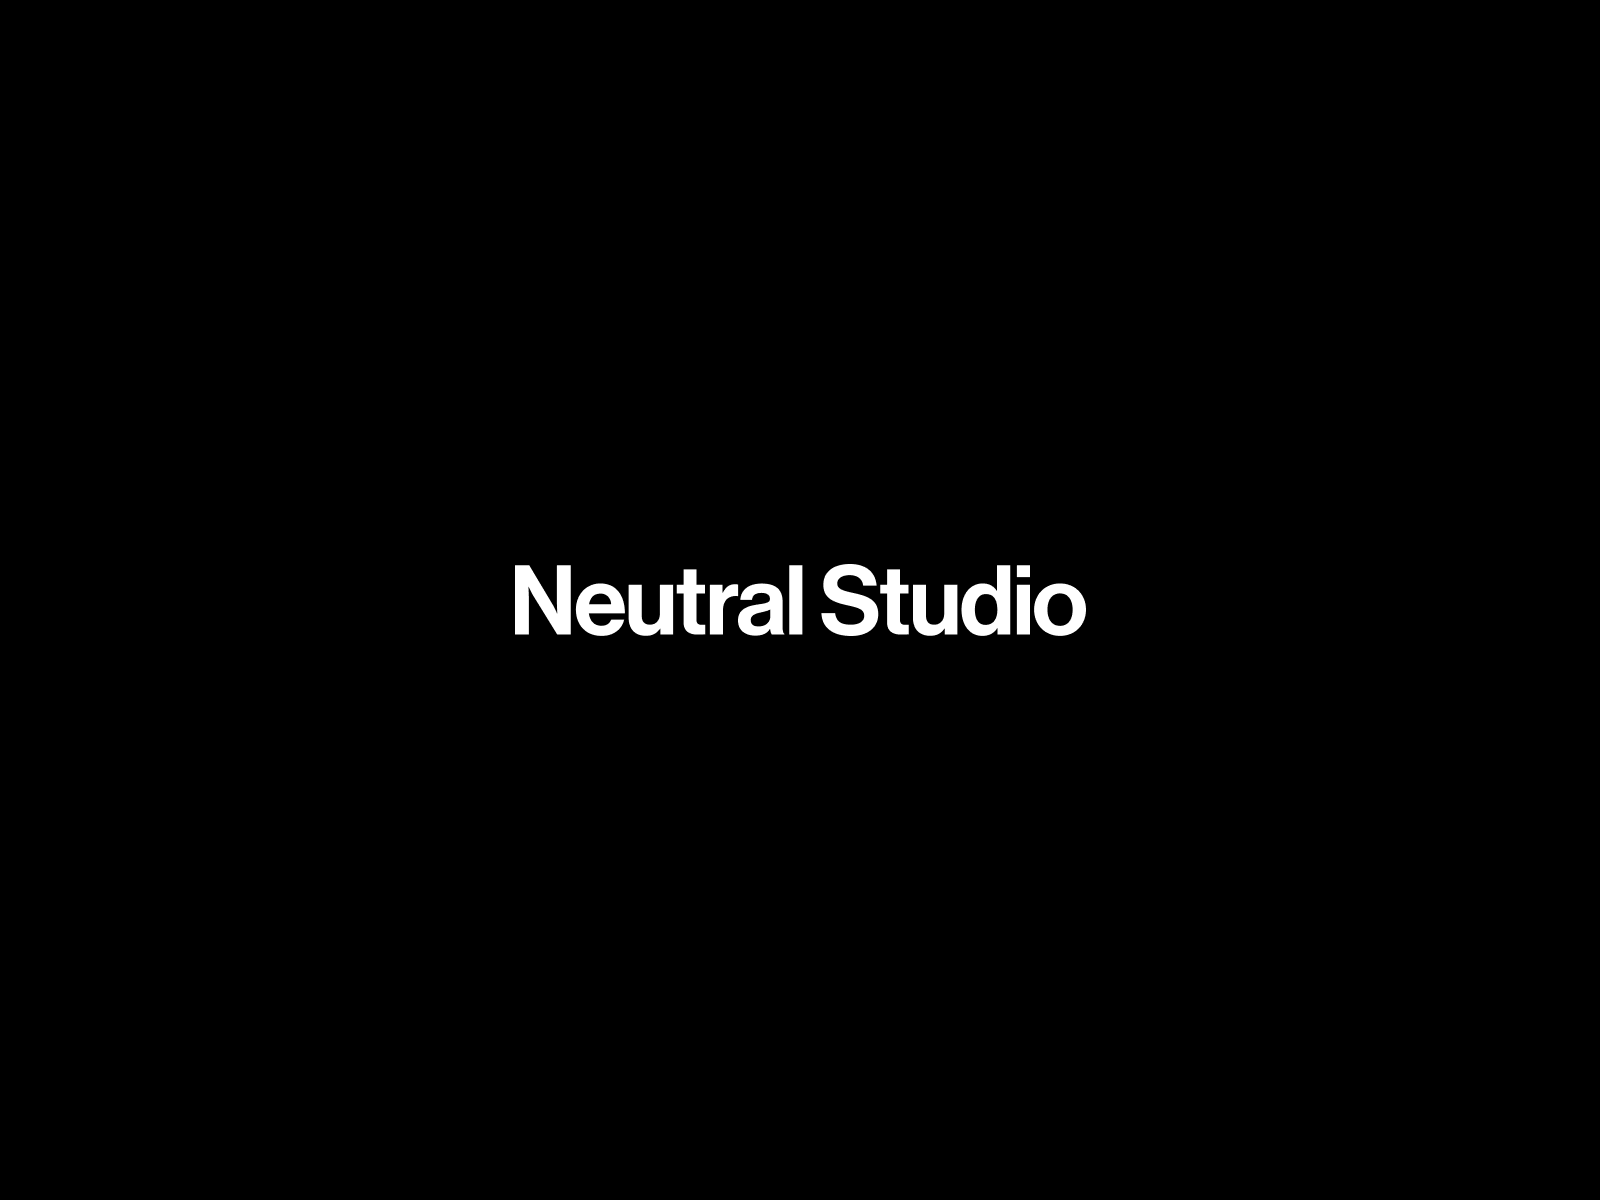 Neutral Studio